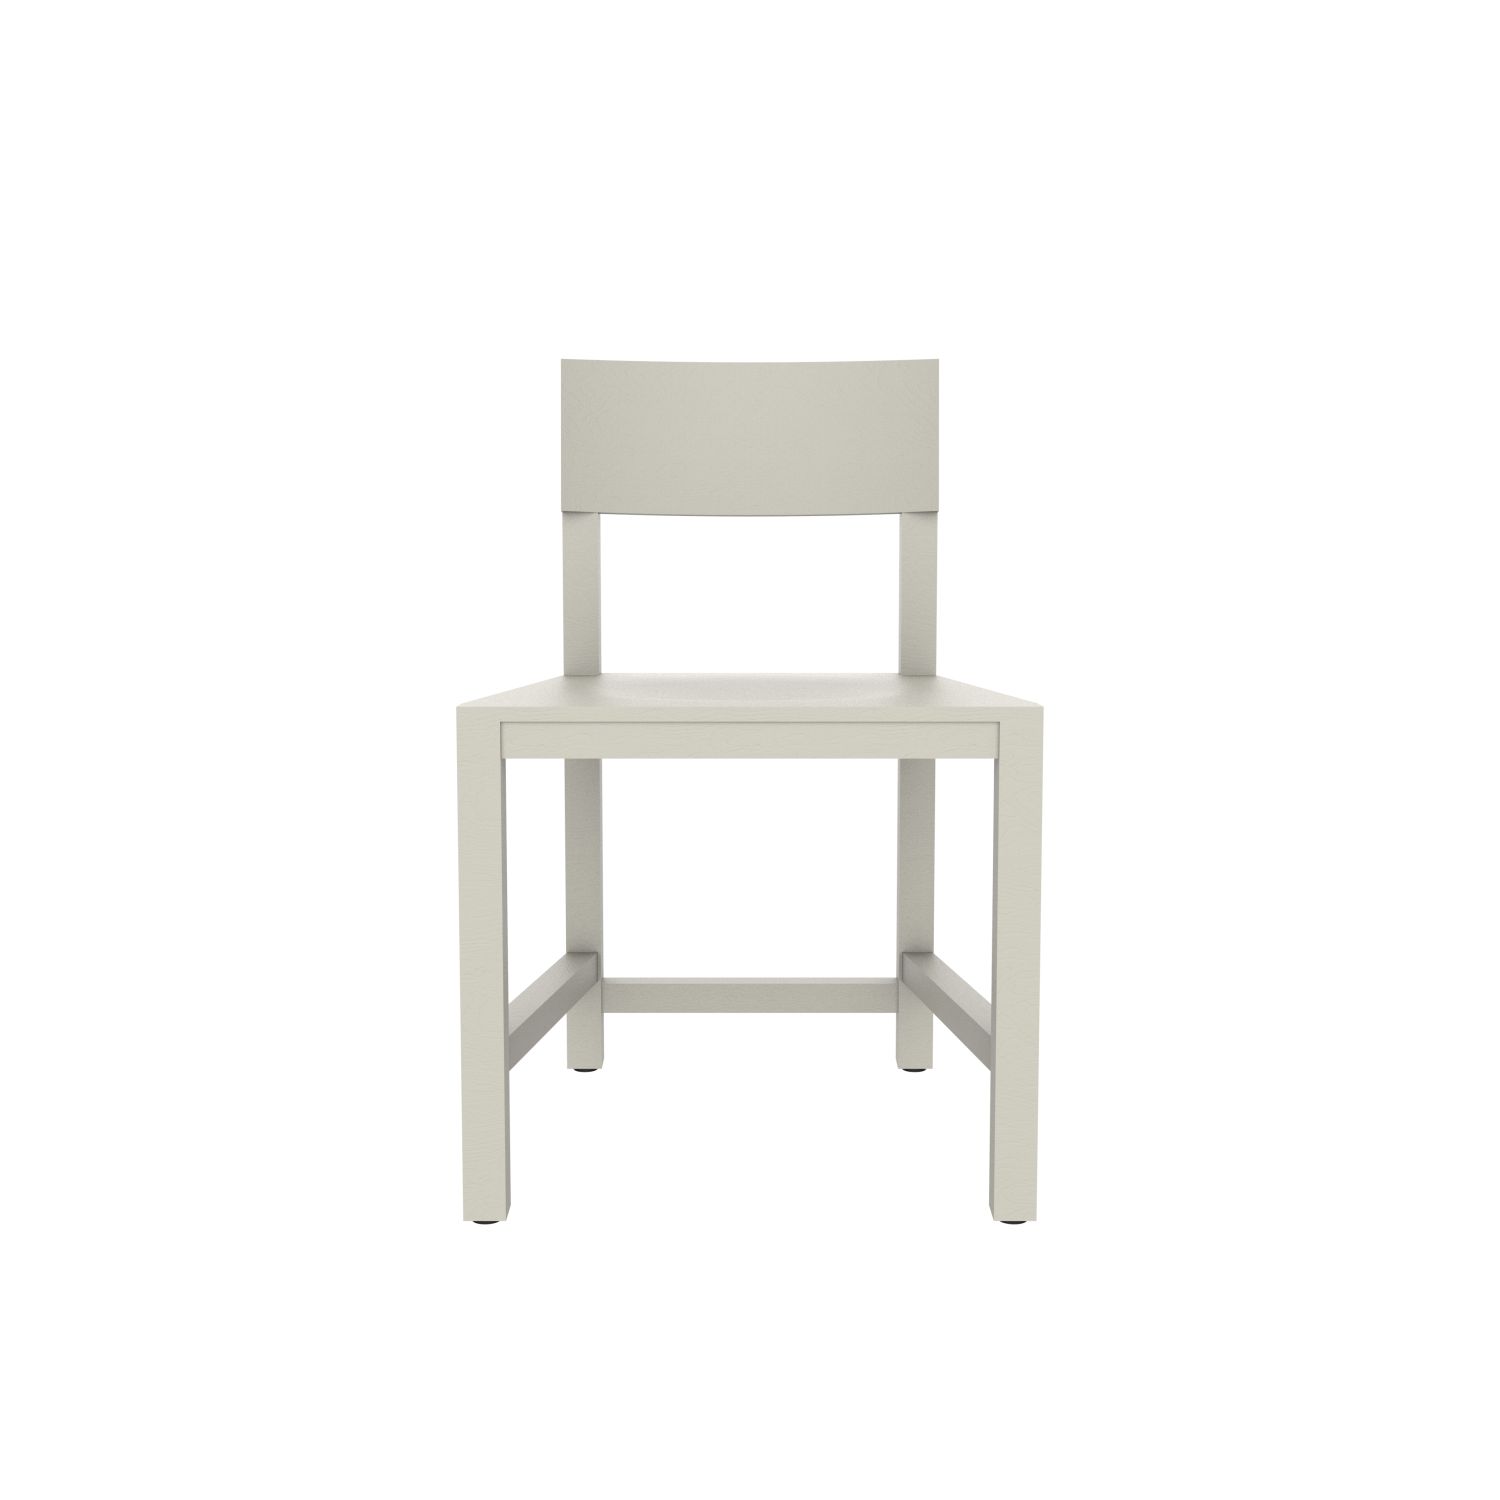 atelier van lieshout shaker chair riviera beige sikkens g00570 hard leg ends